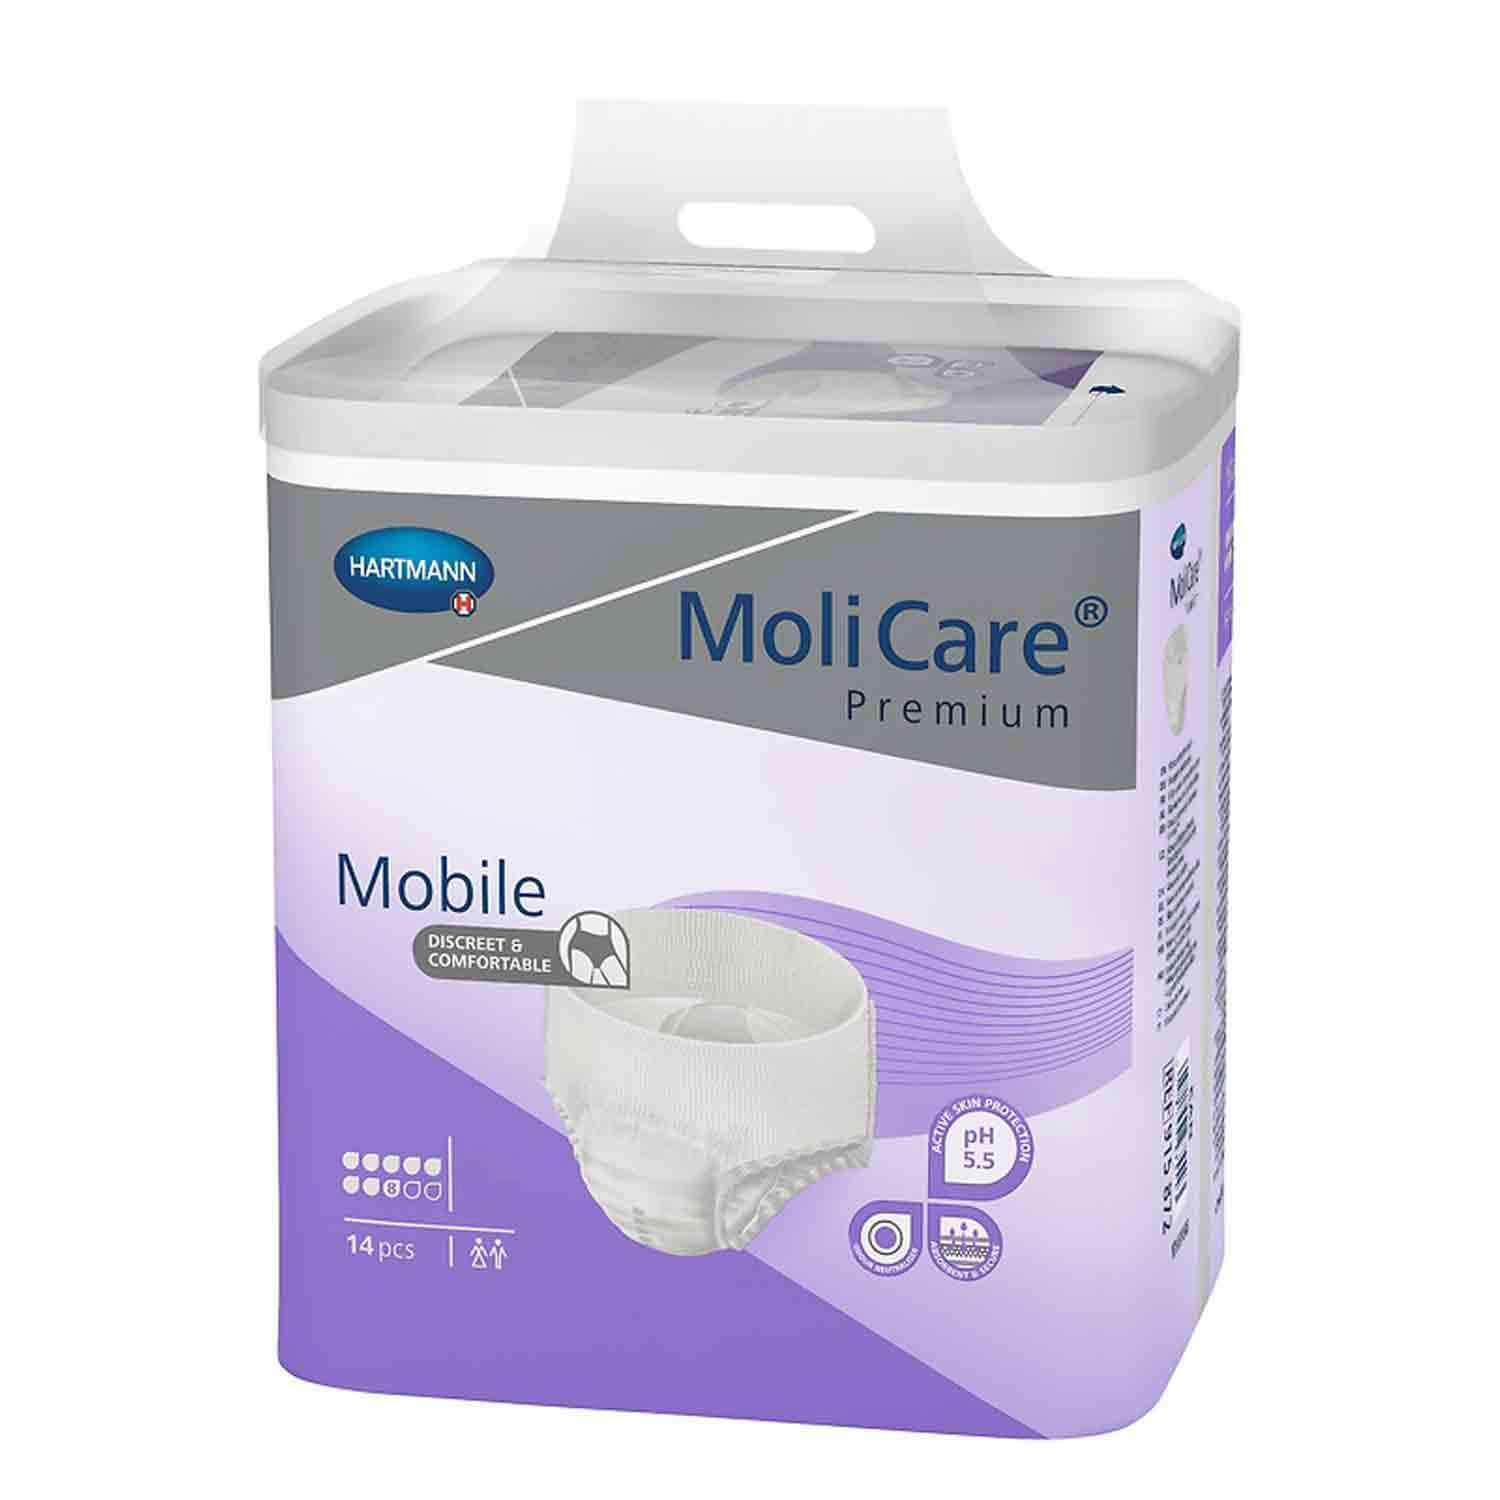 Molicare Premium Mobile 8 Drops Size L (Large) / 4 x 14=56 St  Piece (1 Box)